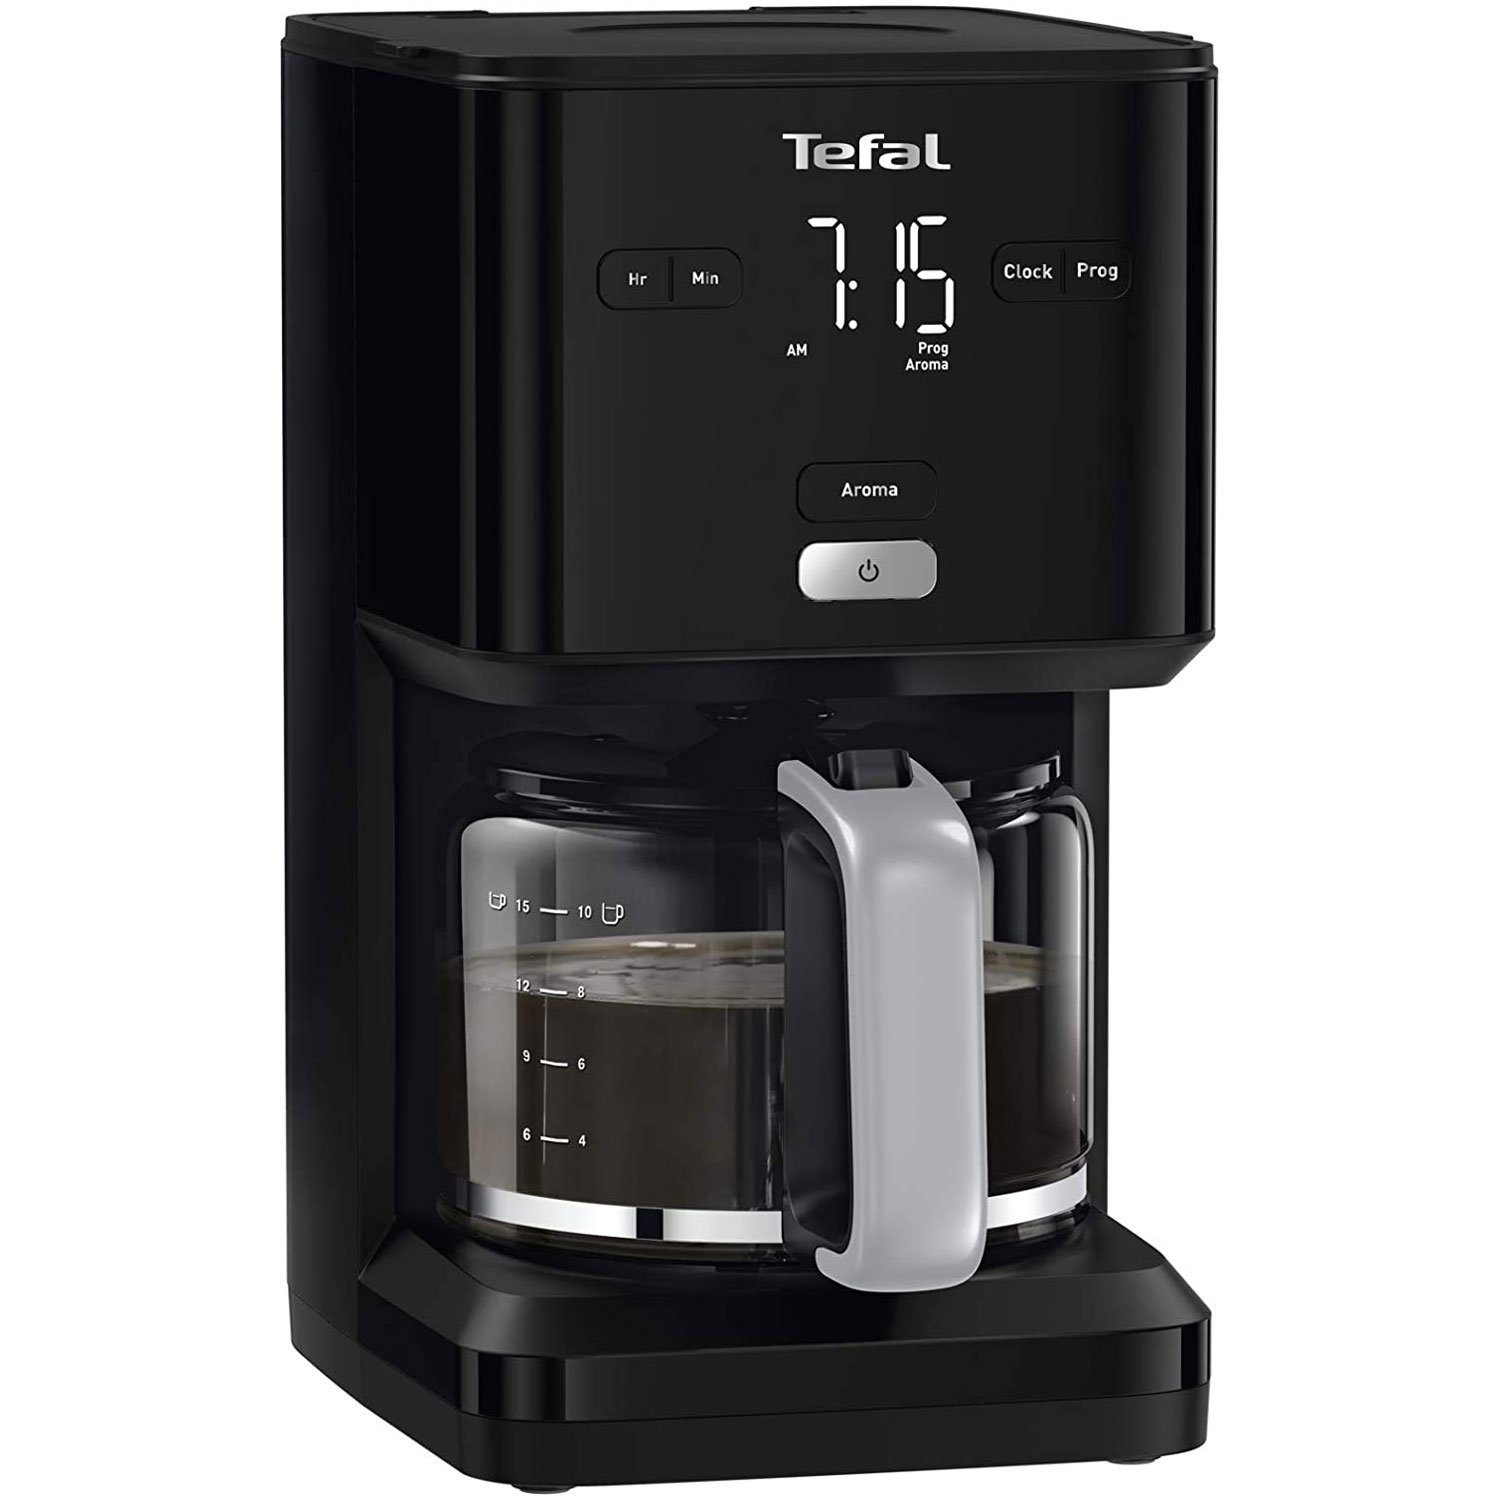 Tefal Filterkaffeemaschine CM600810, 1.25l Kaffeekanne, 24h-Timer, Digitales LCD-Display, Aroma-Funktion, Warmhalte-Funktion | Filterkaffeemaschinen